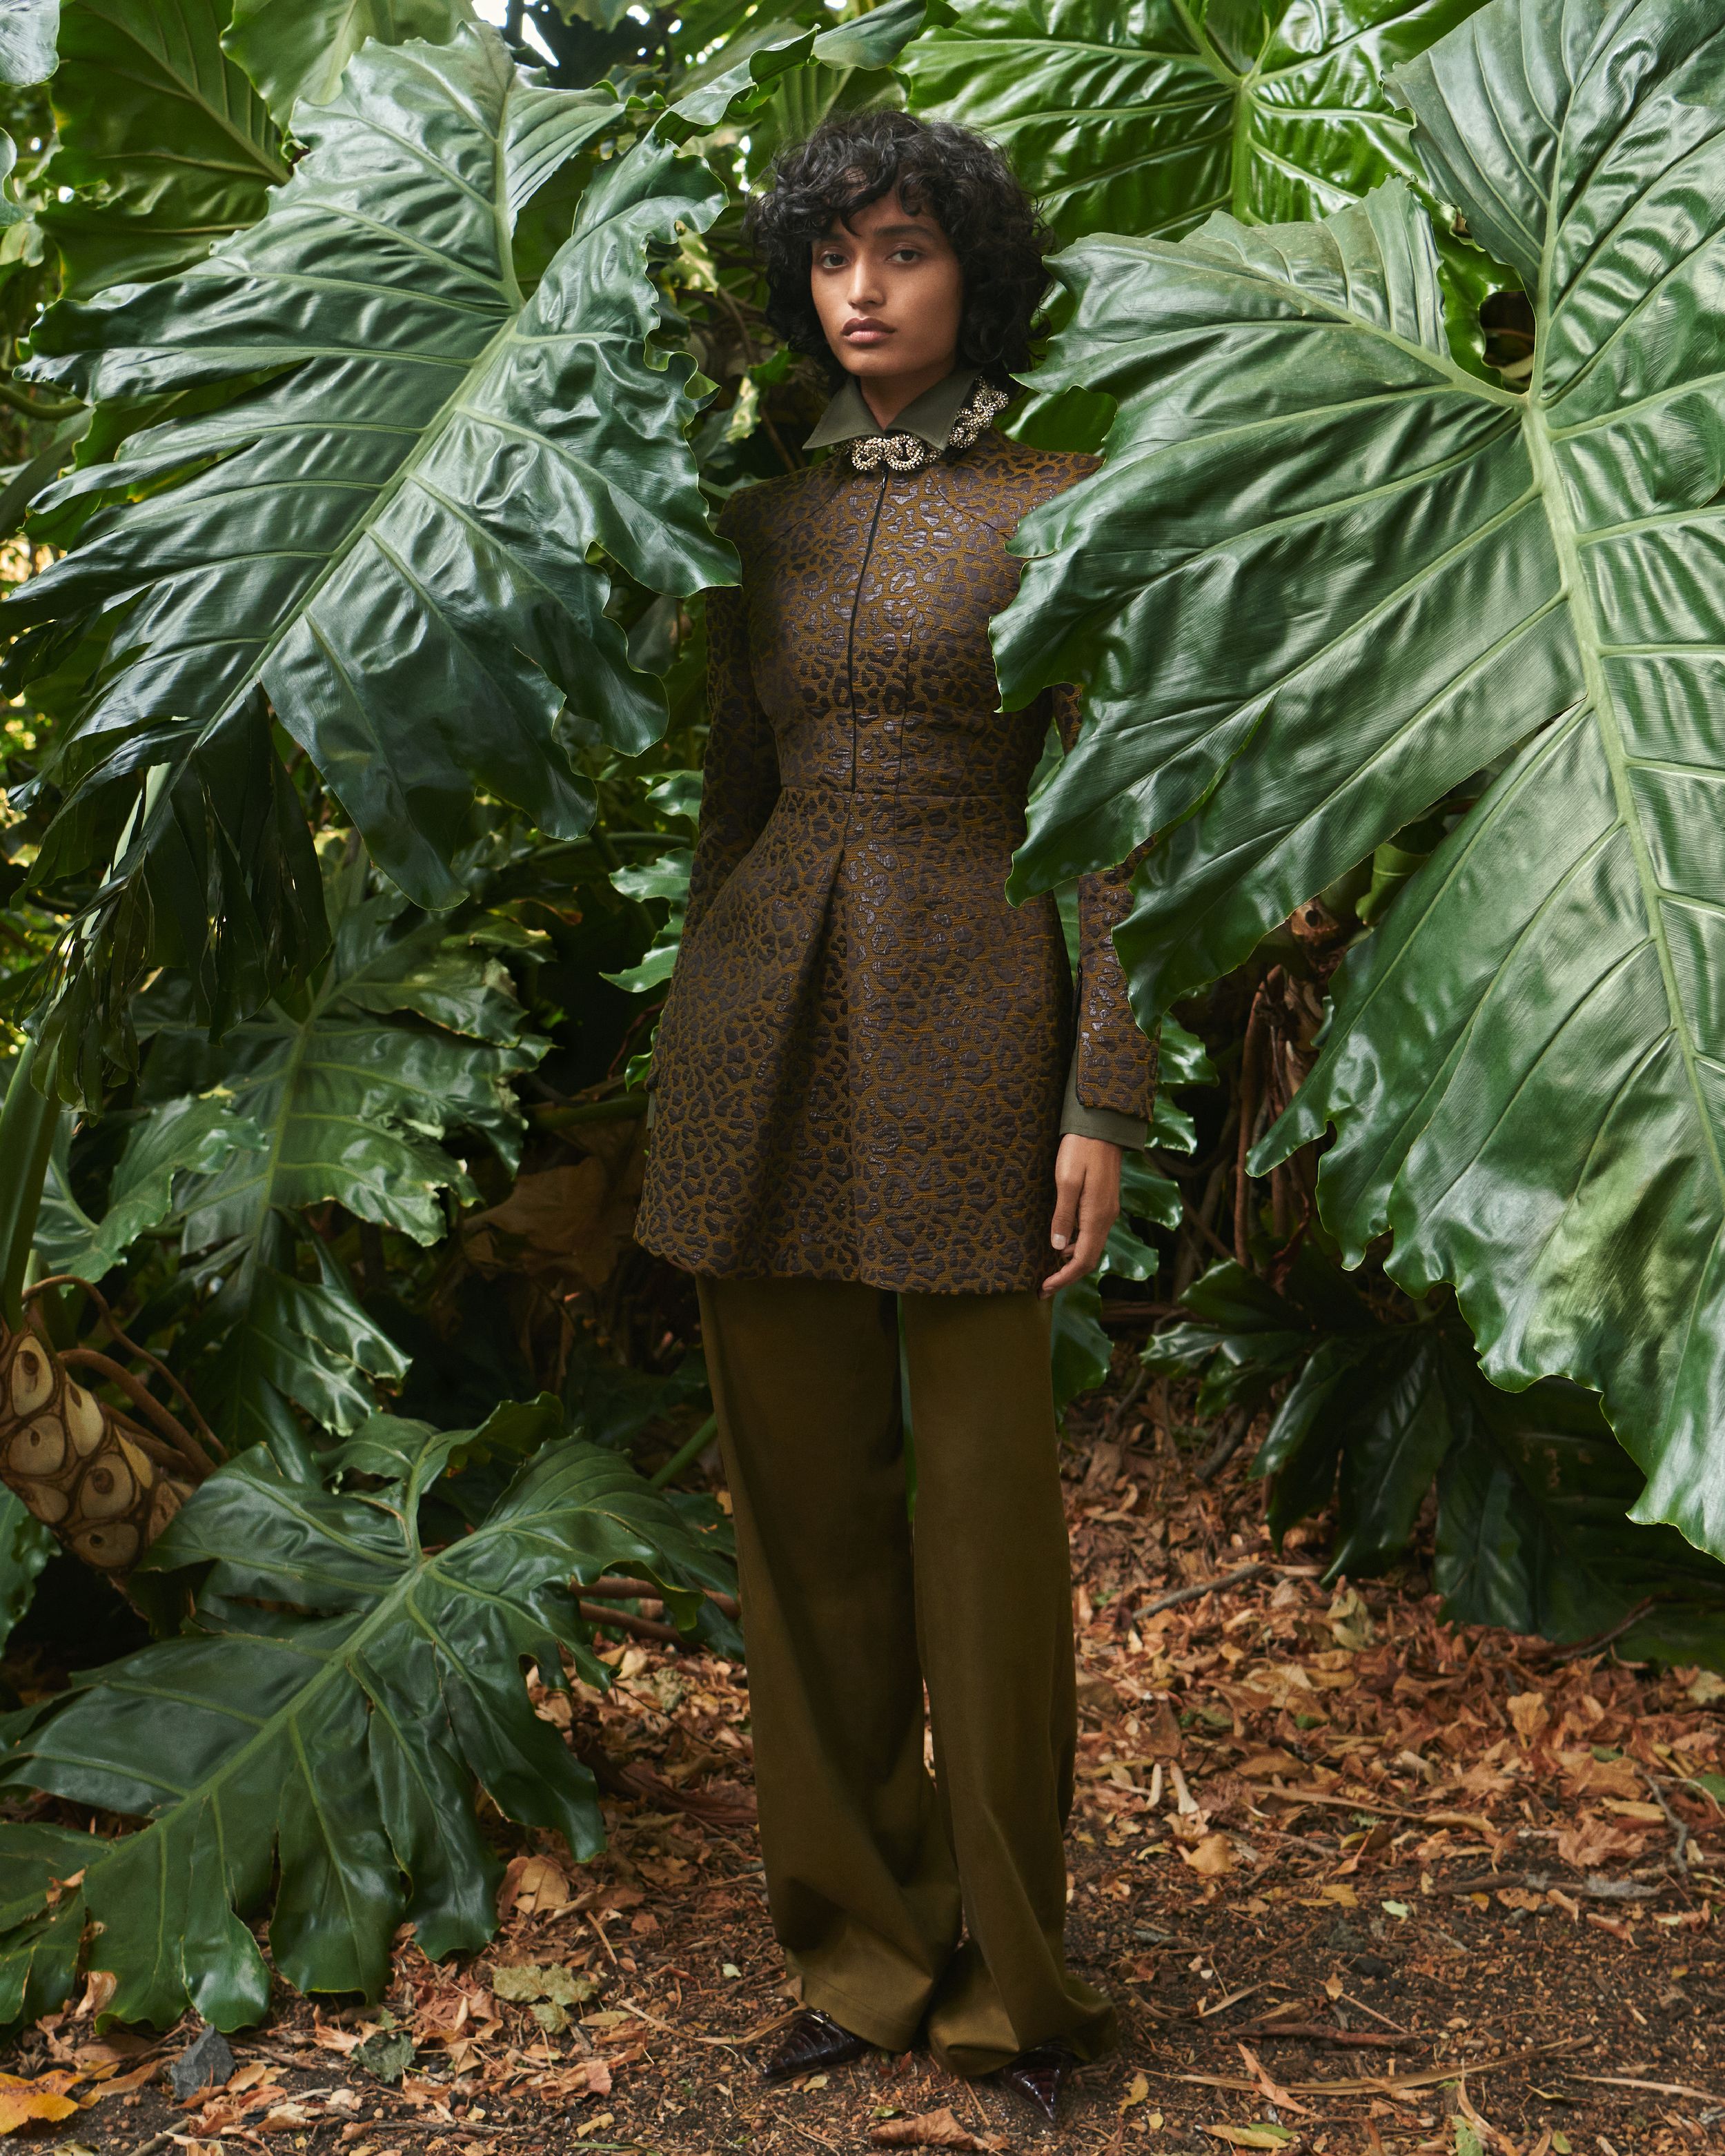 Model standing between large leaves wearing an brown ocelot-print dress brown trousers